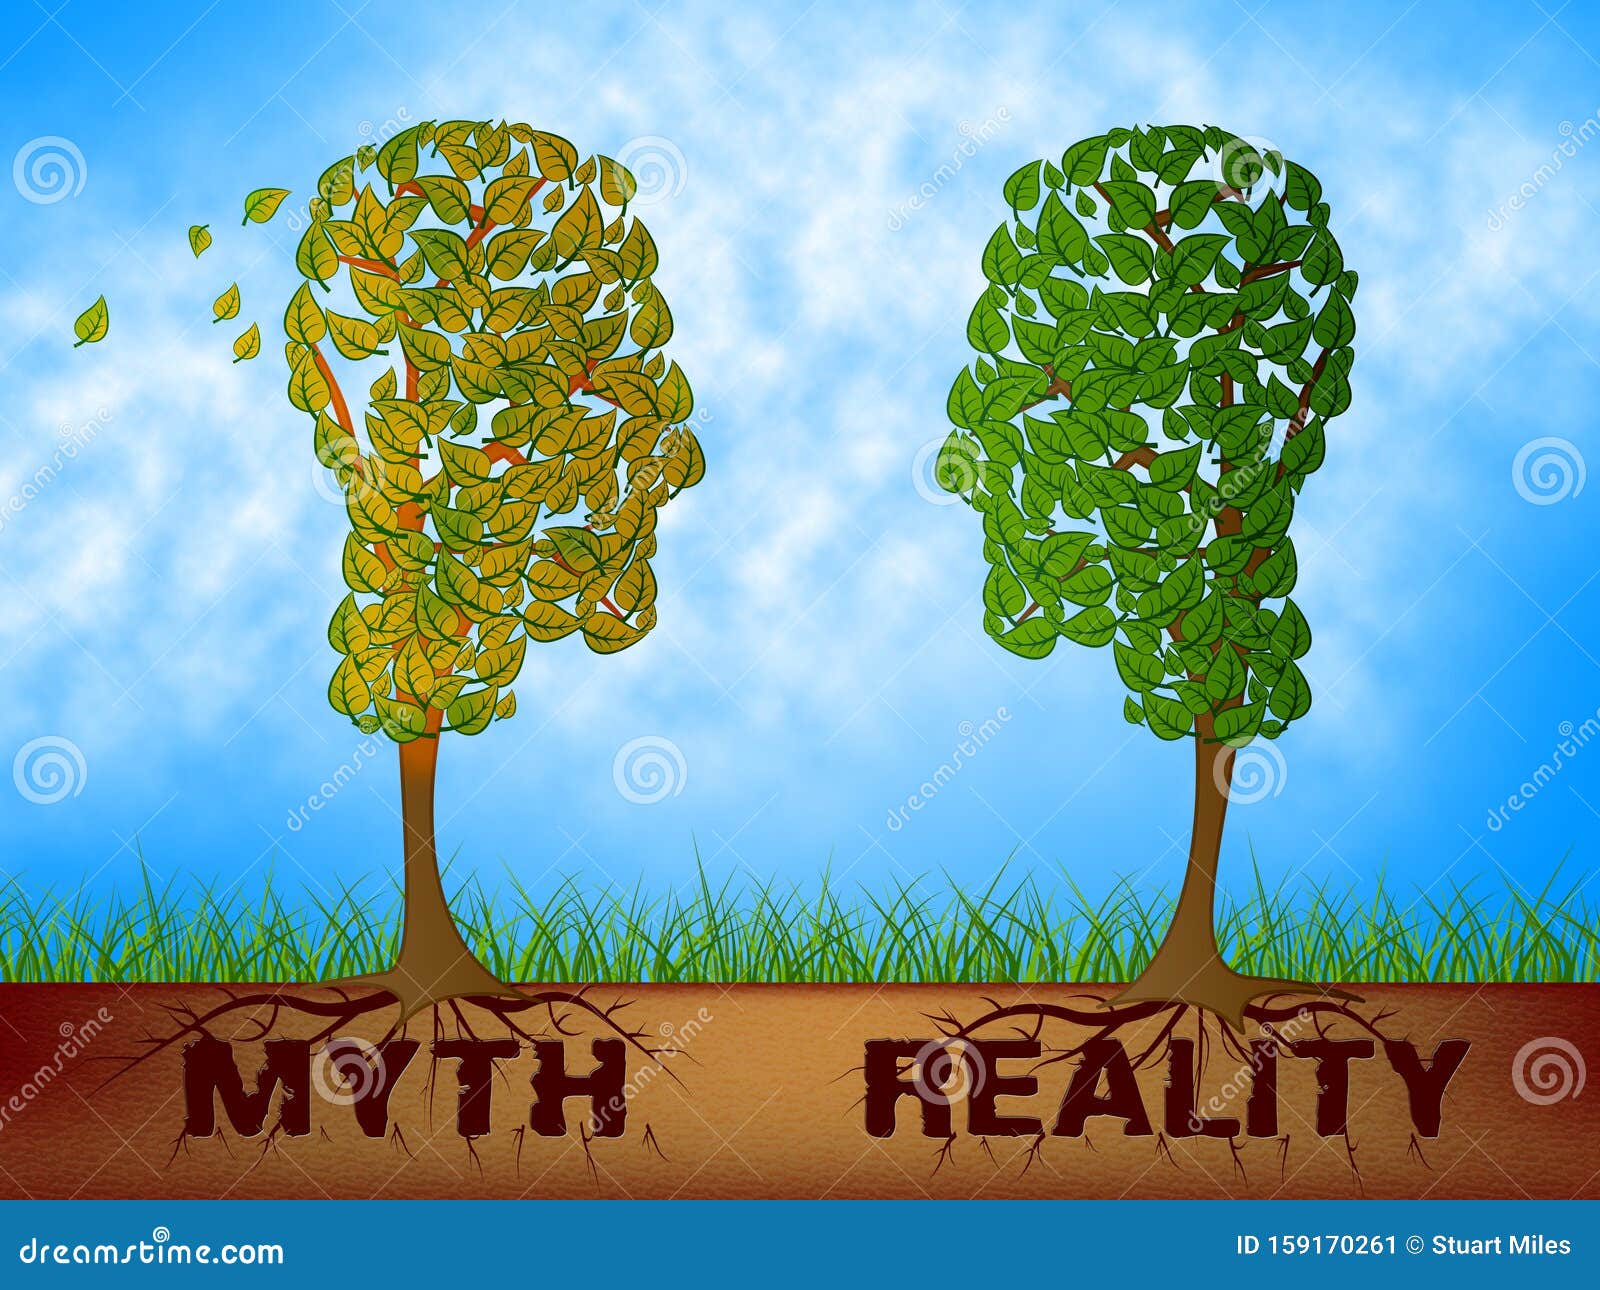 Myth Versus Reality Words Showing False Mythology Vs Real Life - 3d